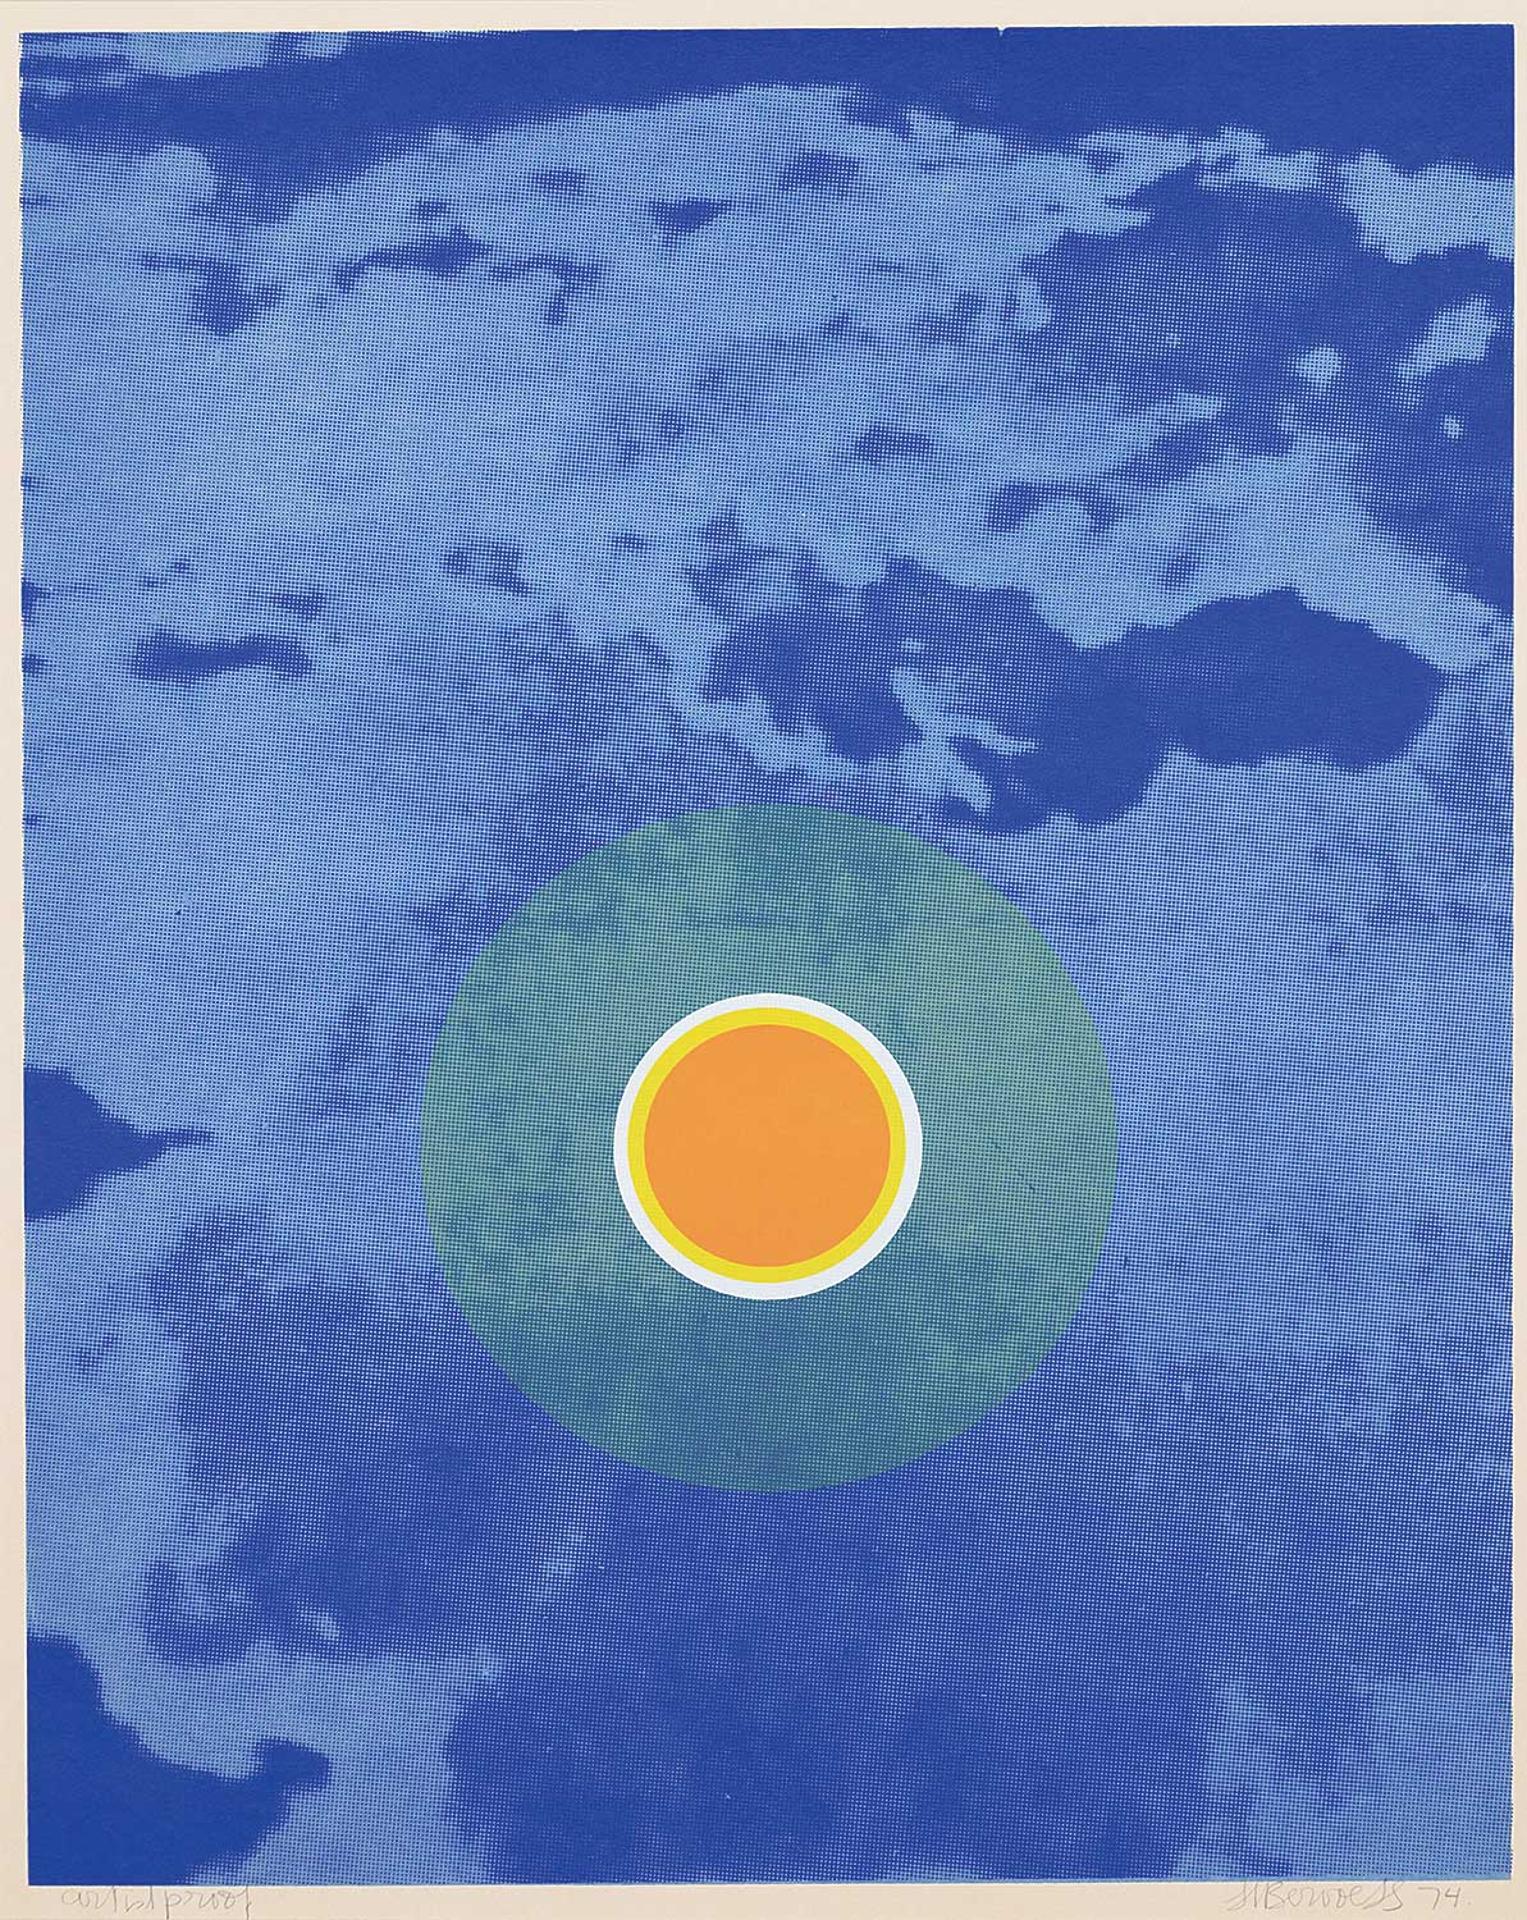 Hendrikus Bervoets - Untitled - Abstract Sky Circles  #Artist's Proof